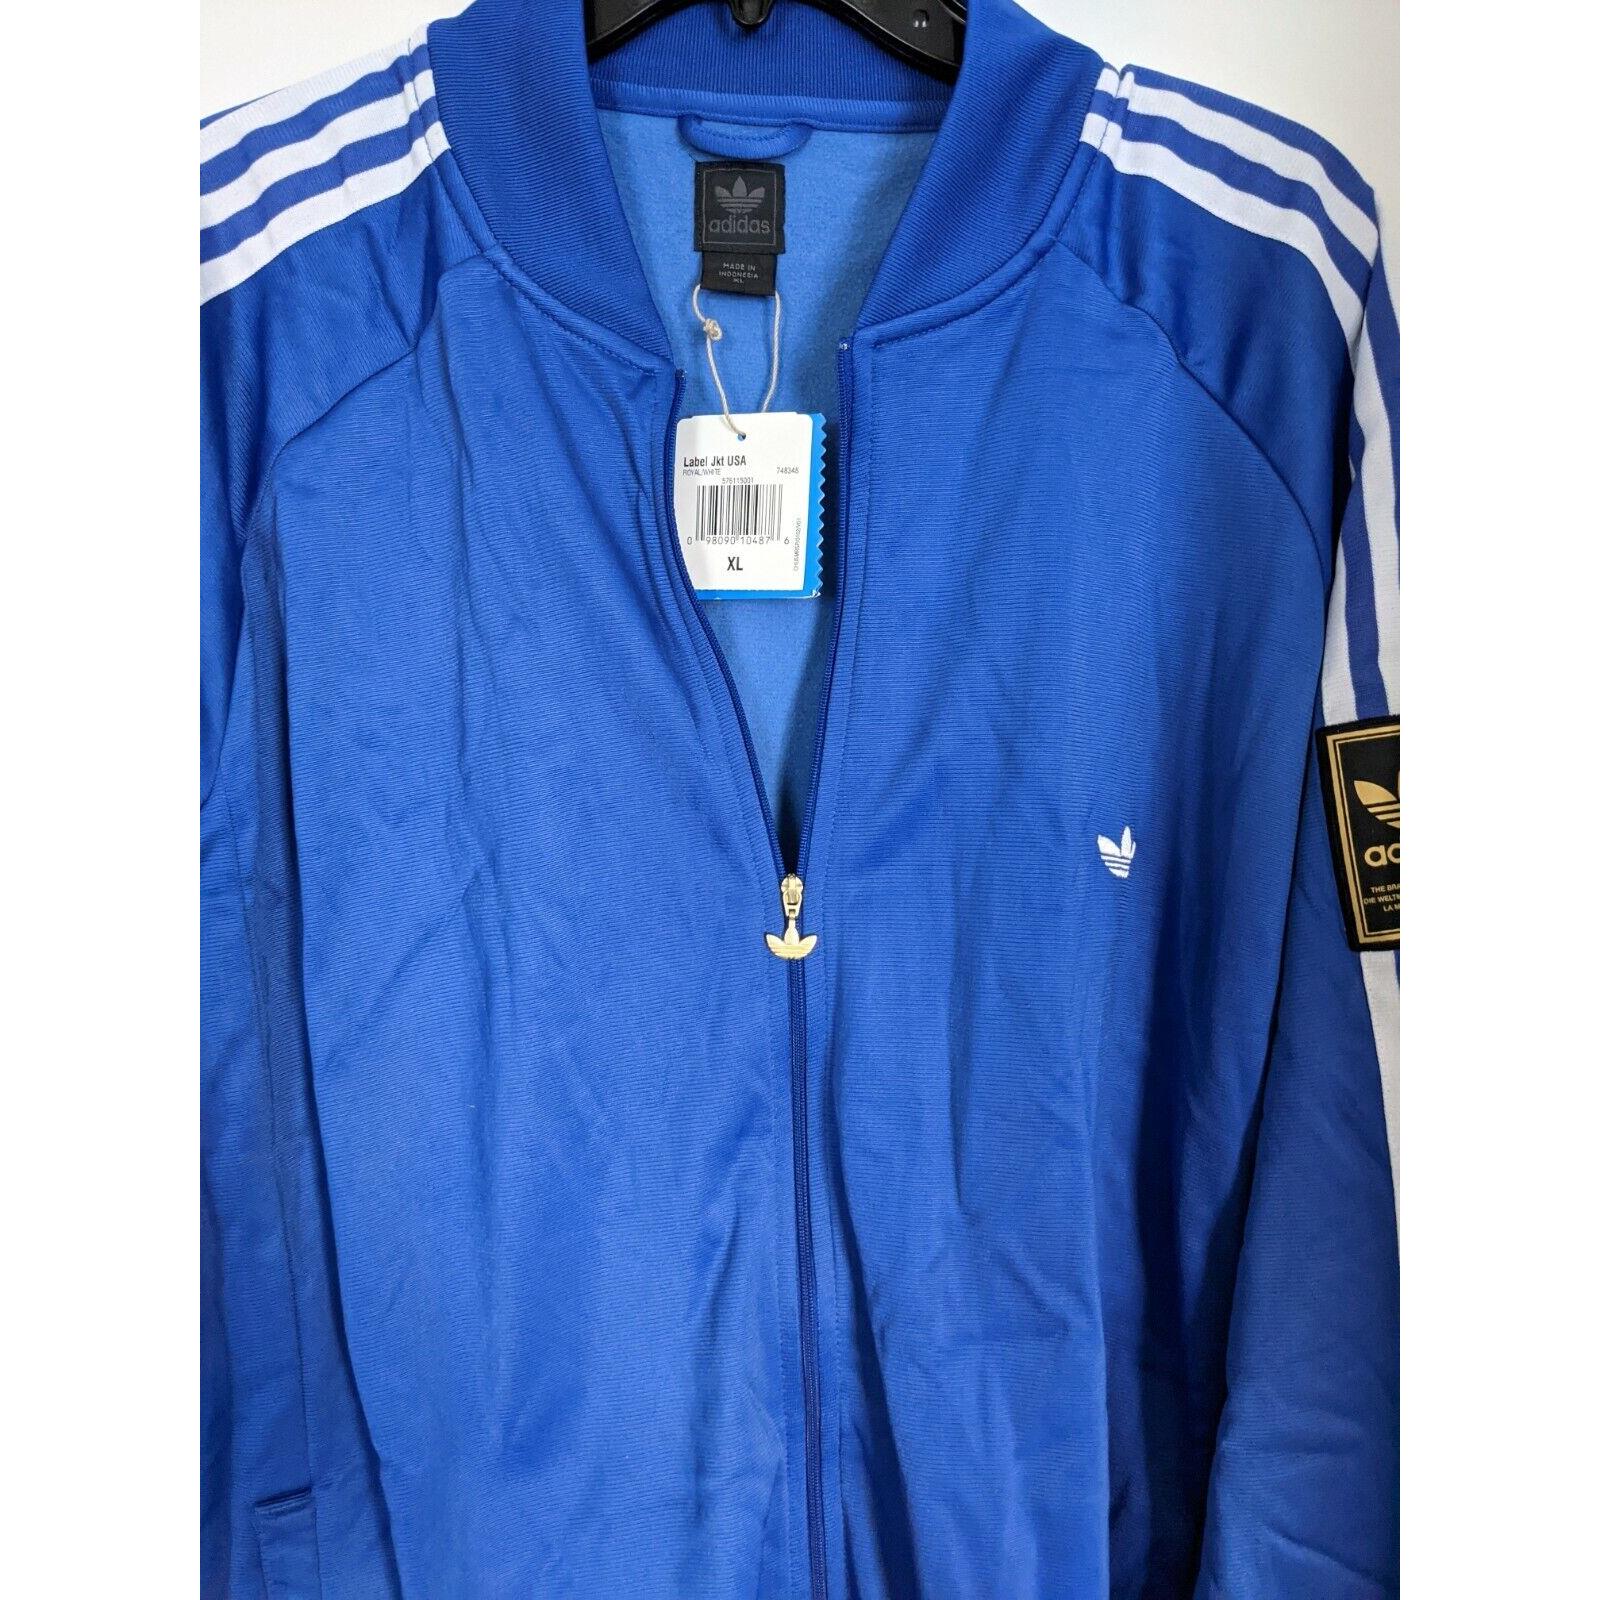 Adidas clothing USA - Blue 2